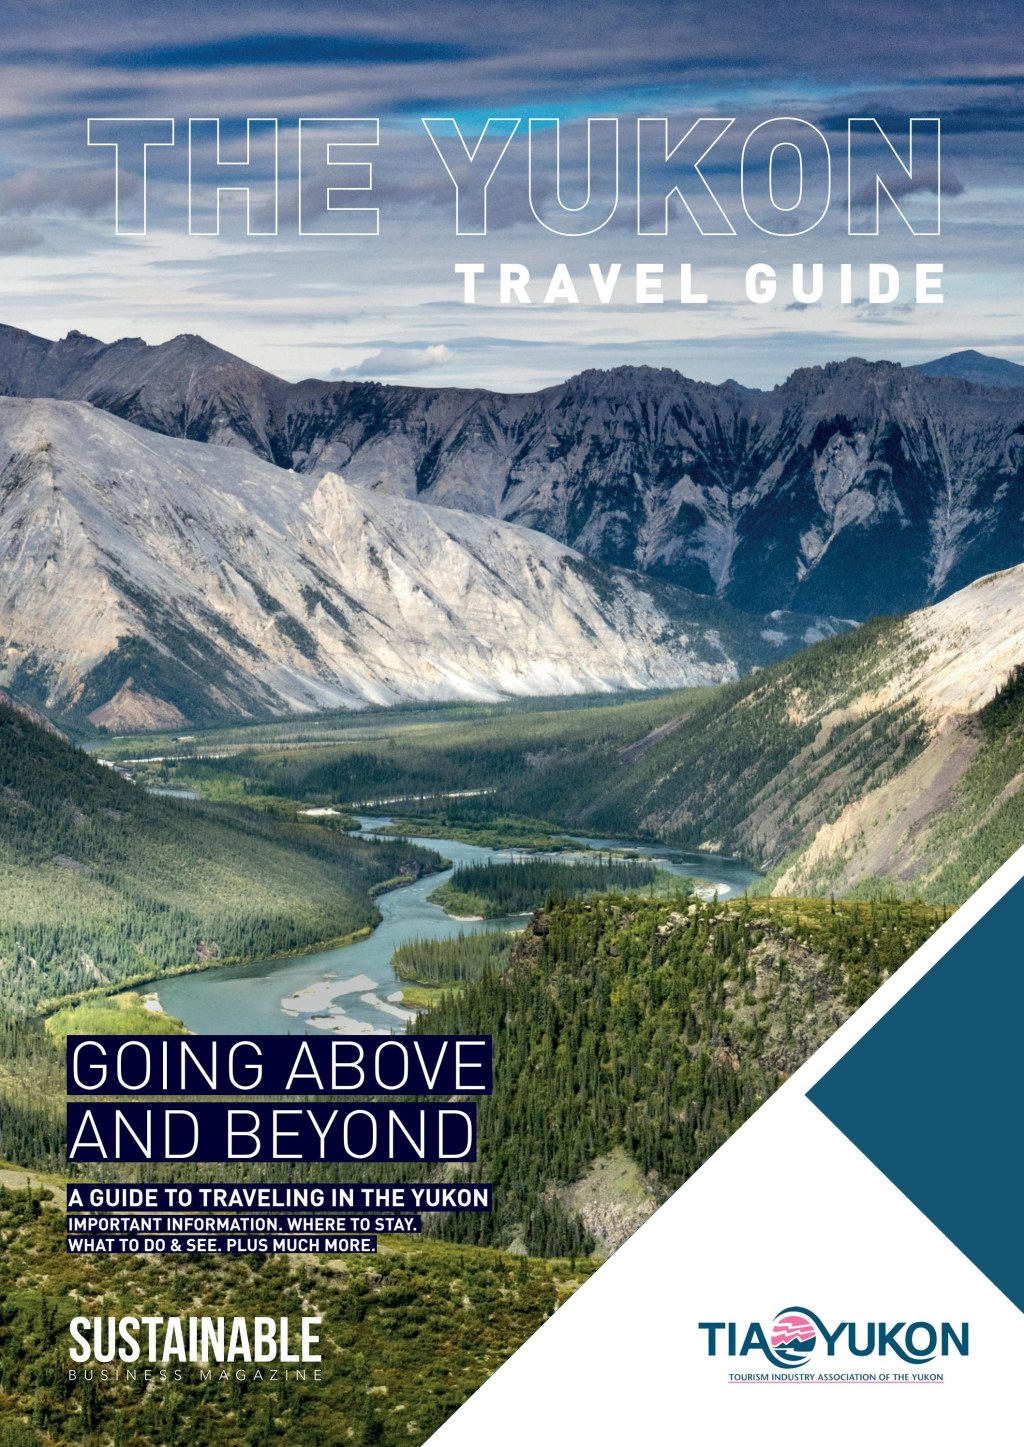 travel plan for yukon - The Yukon Travel Guide by Sustainable Business Magazine - Issuu